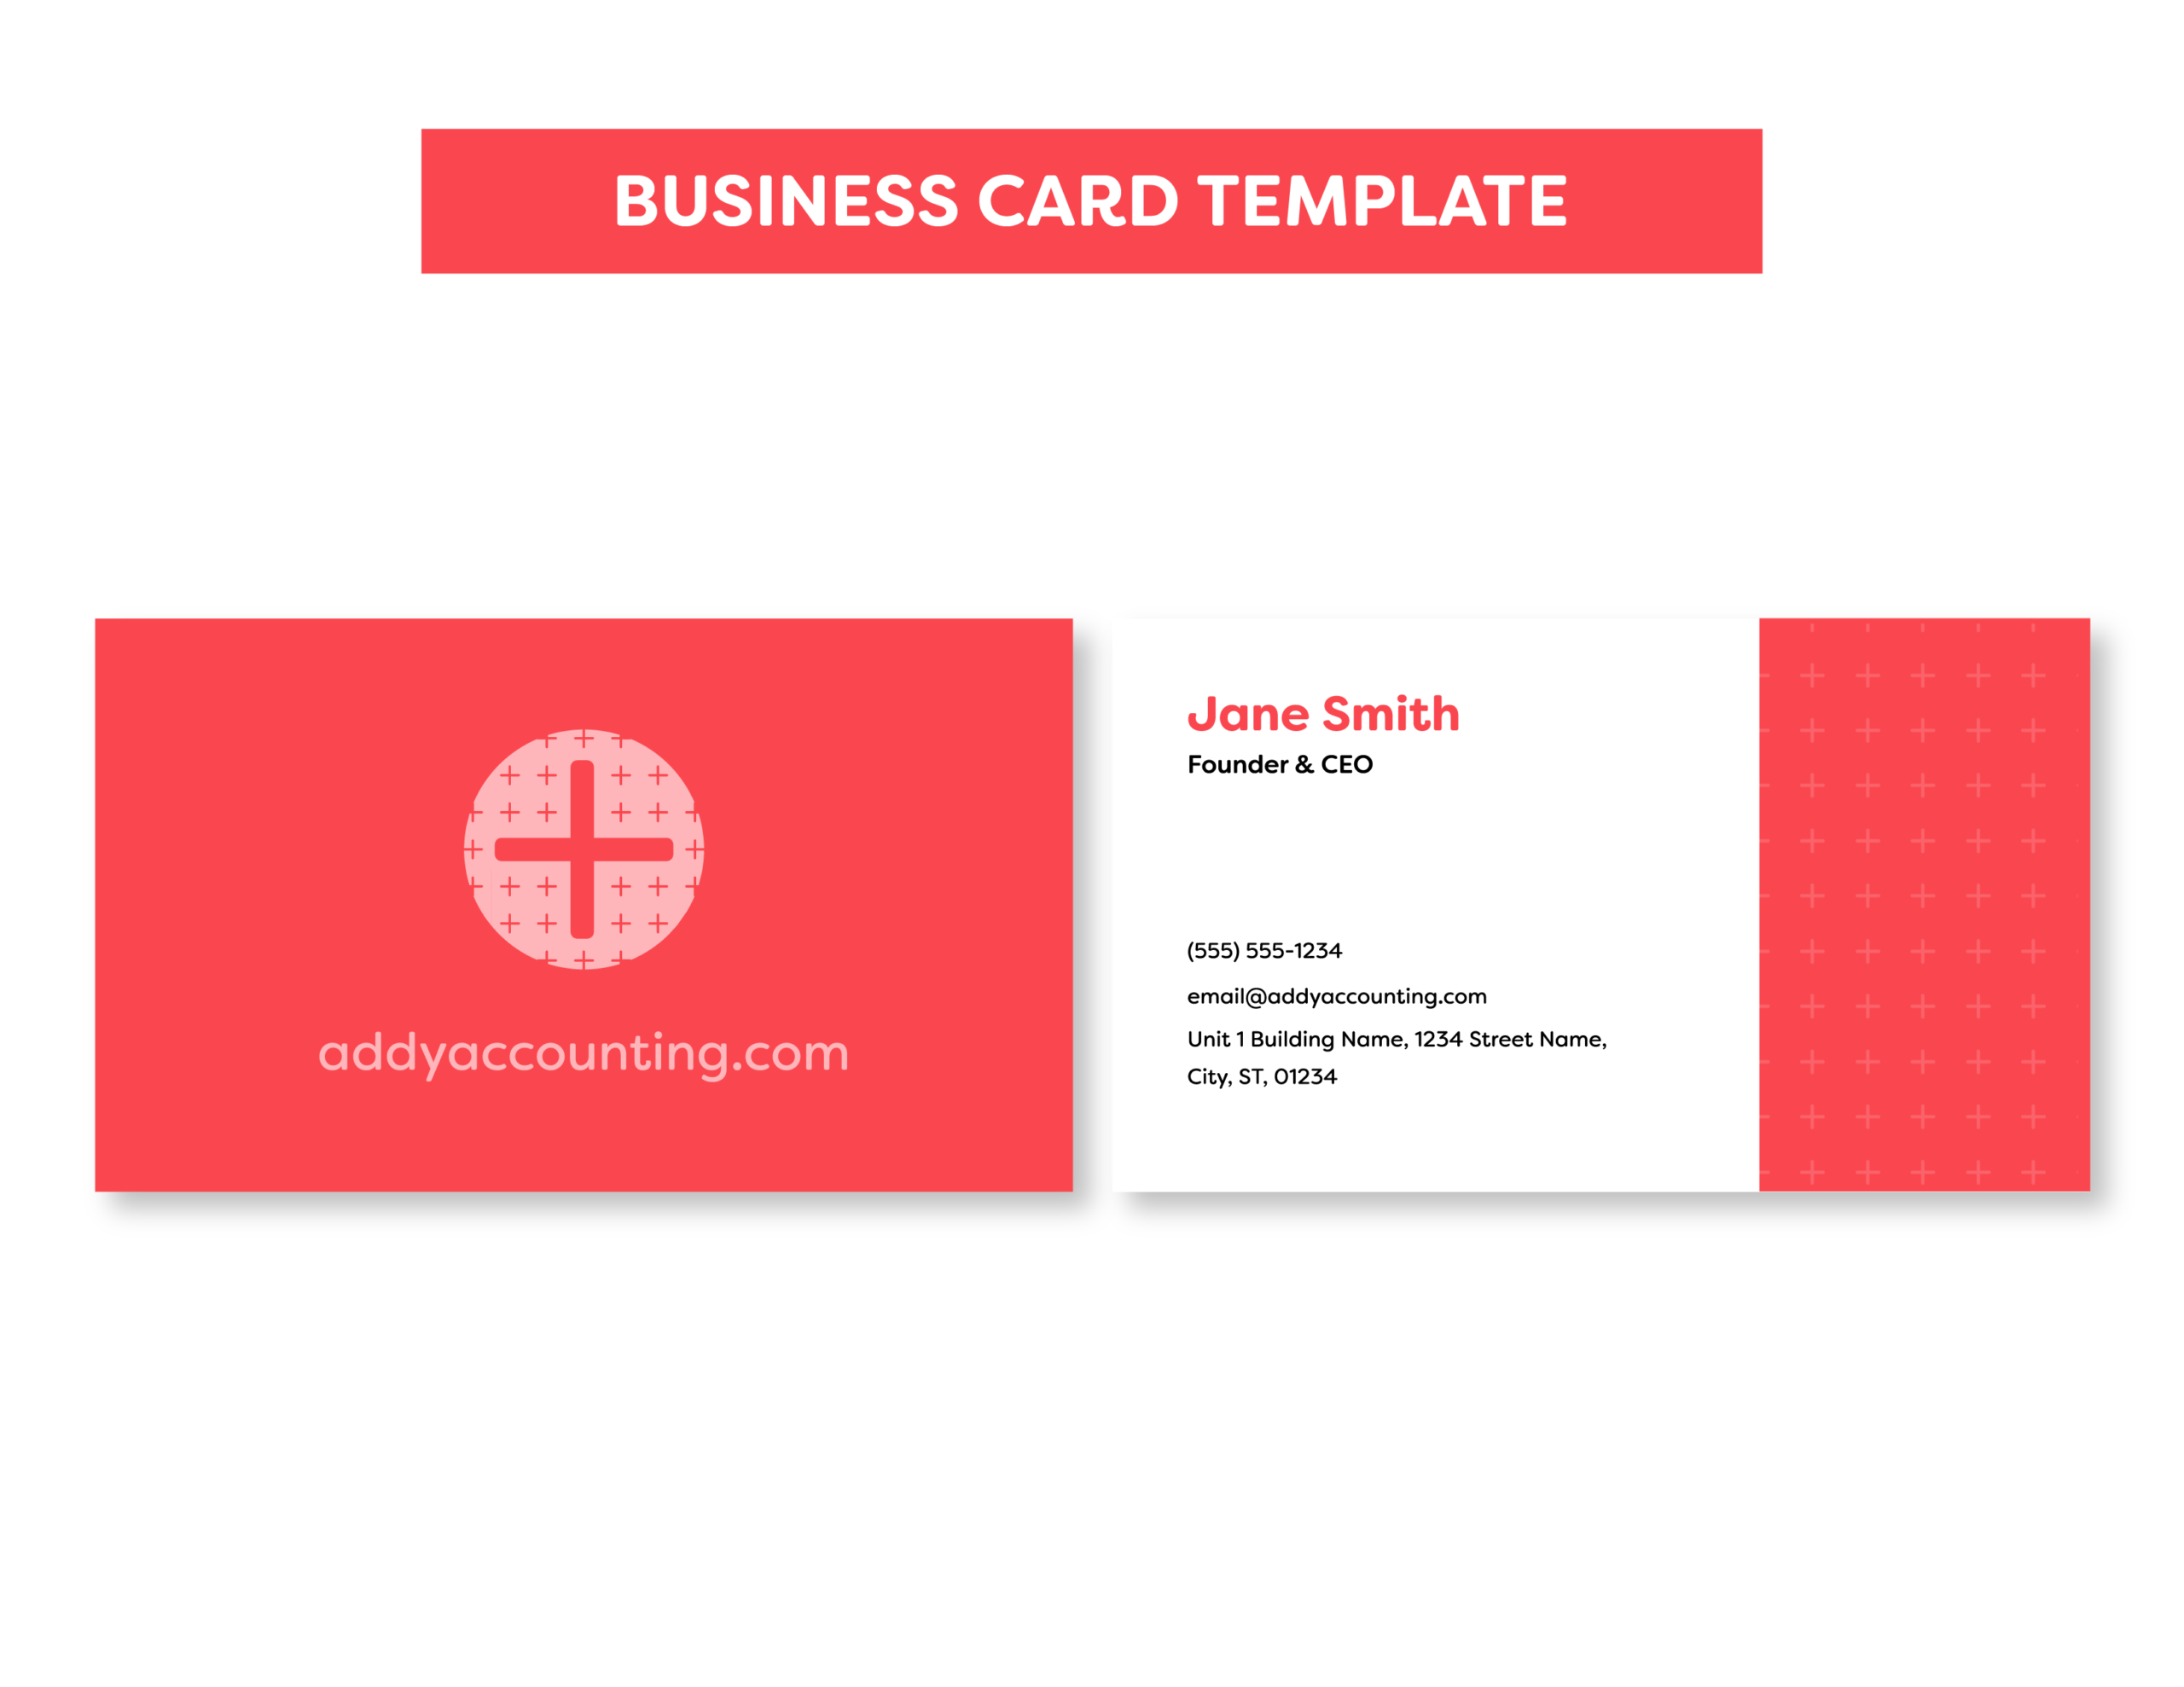 04AddyAcc_Business Card Template